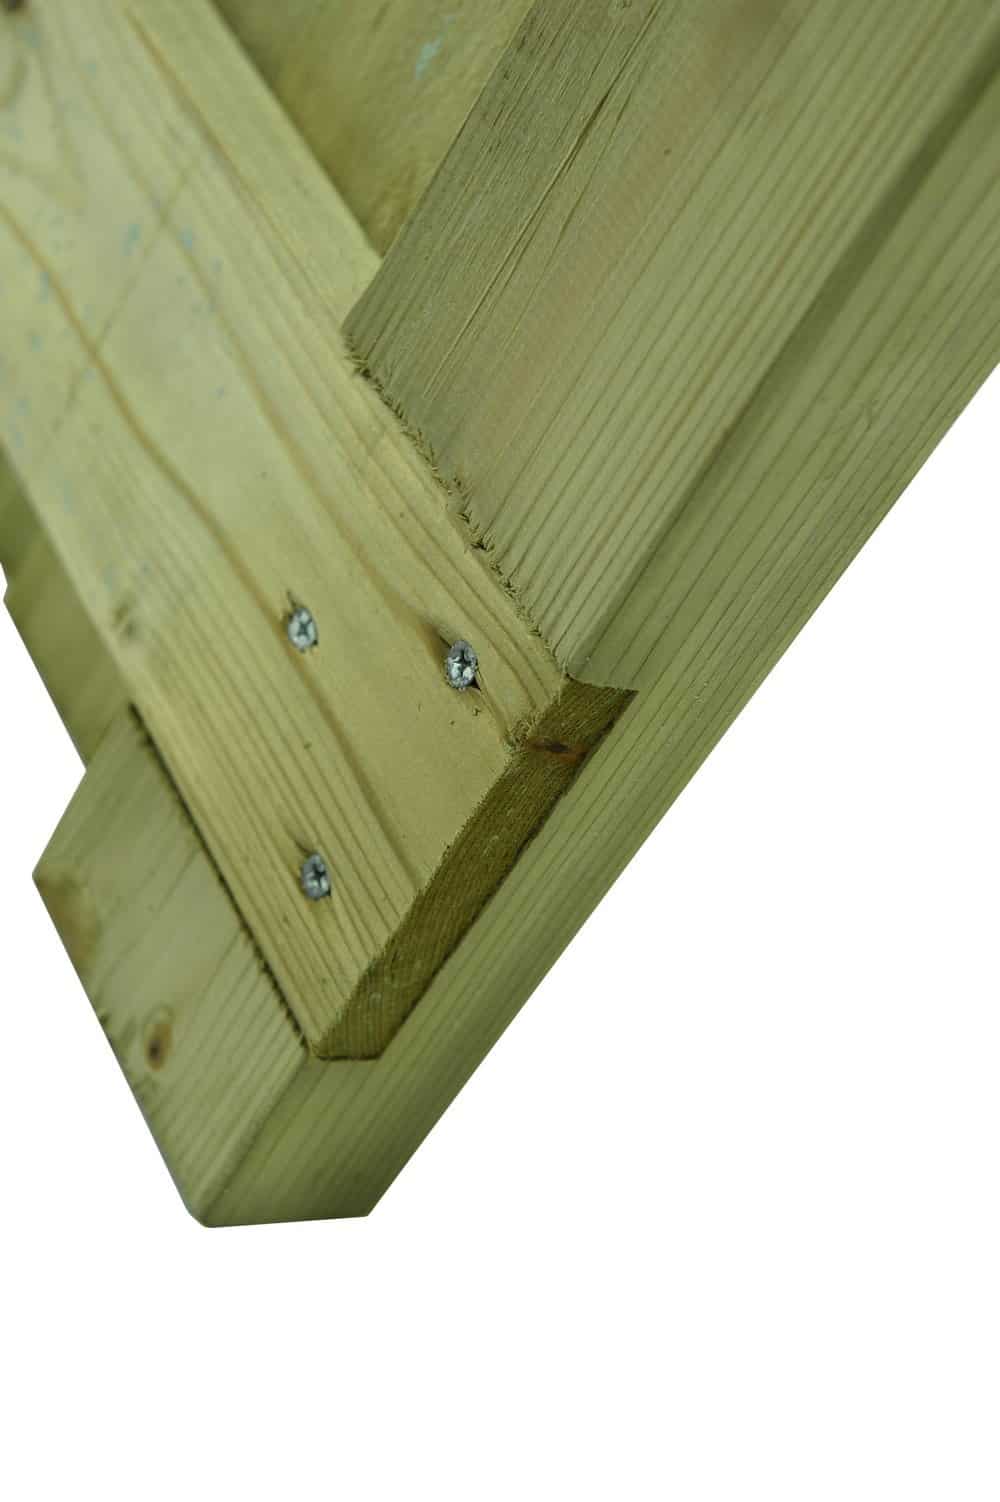 Closeboard Gate > Woodbank Timber